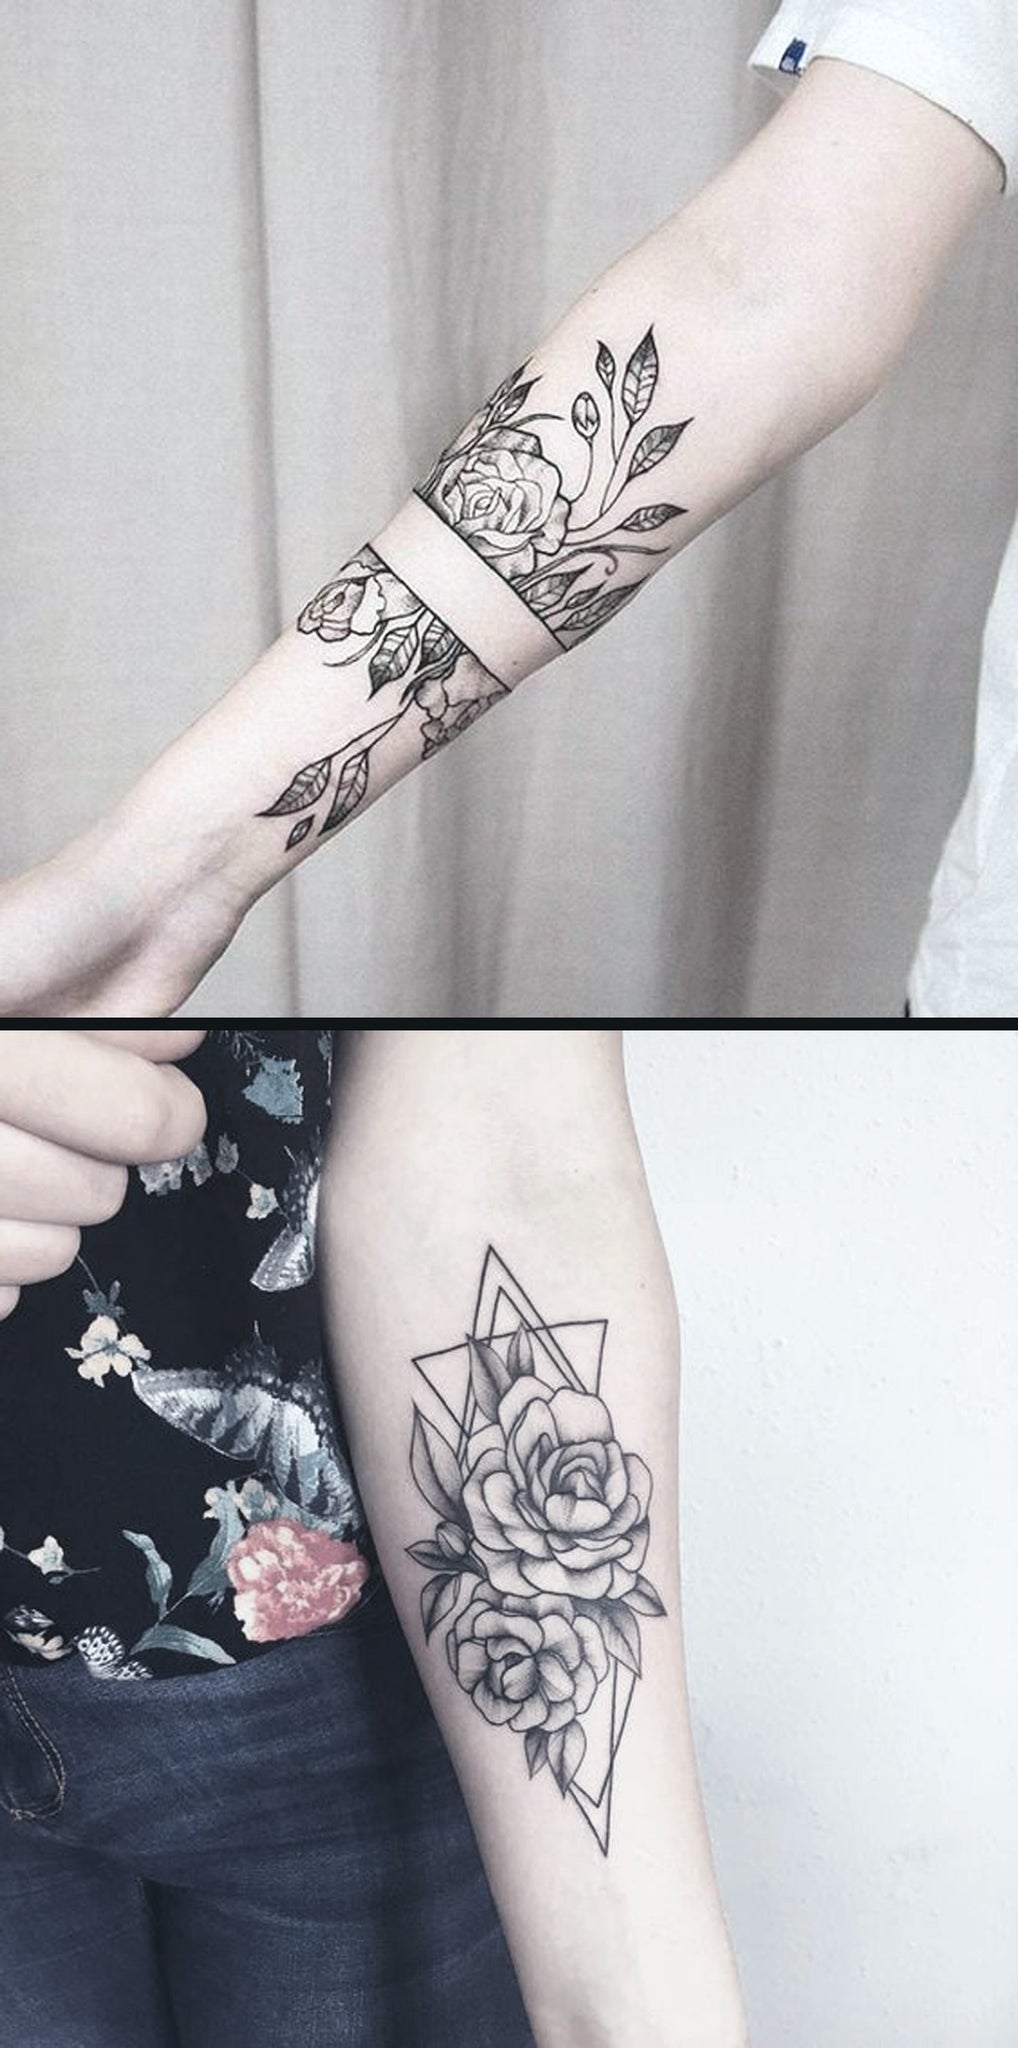 Geometric Diamond Rose Forearm Tattoo Ideas for Women - Black Wild Flower Vine Leaf Arm Tat - www.MyBodiArt.com 